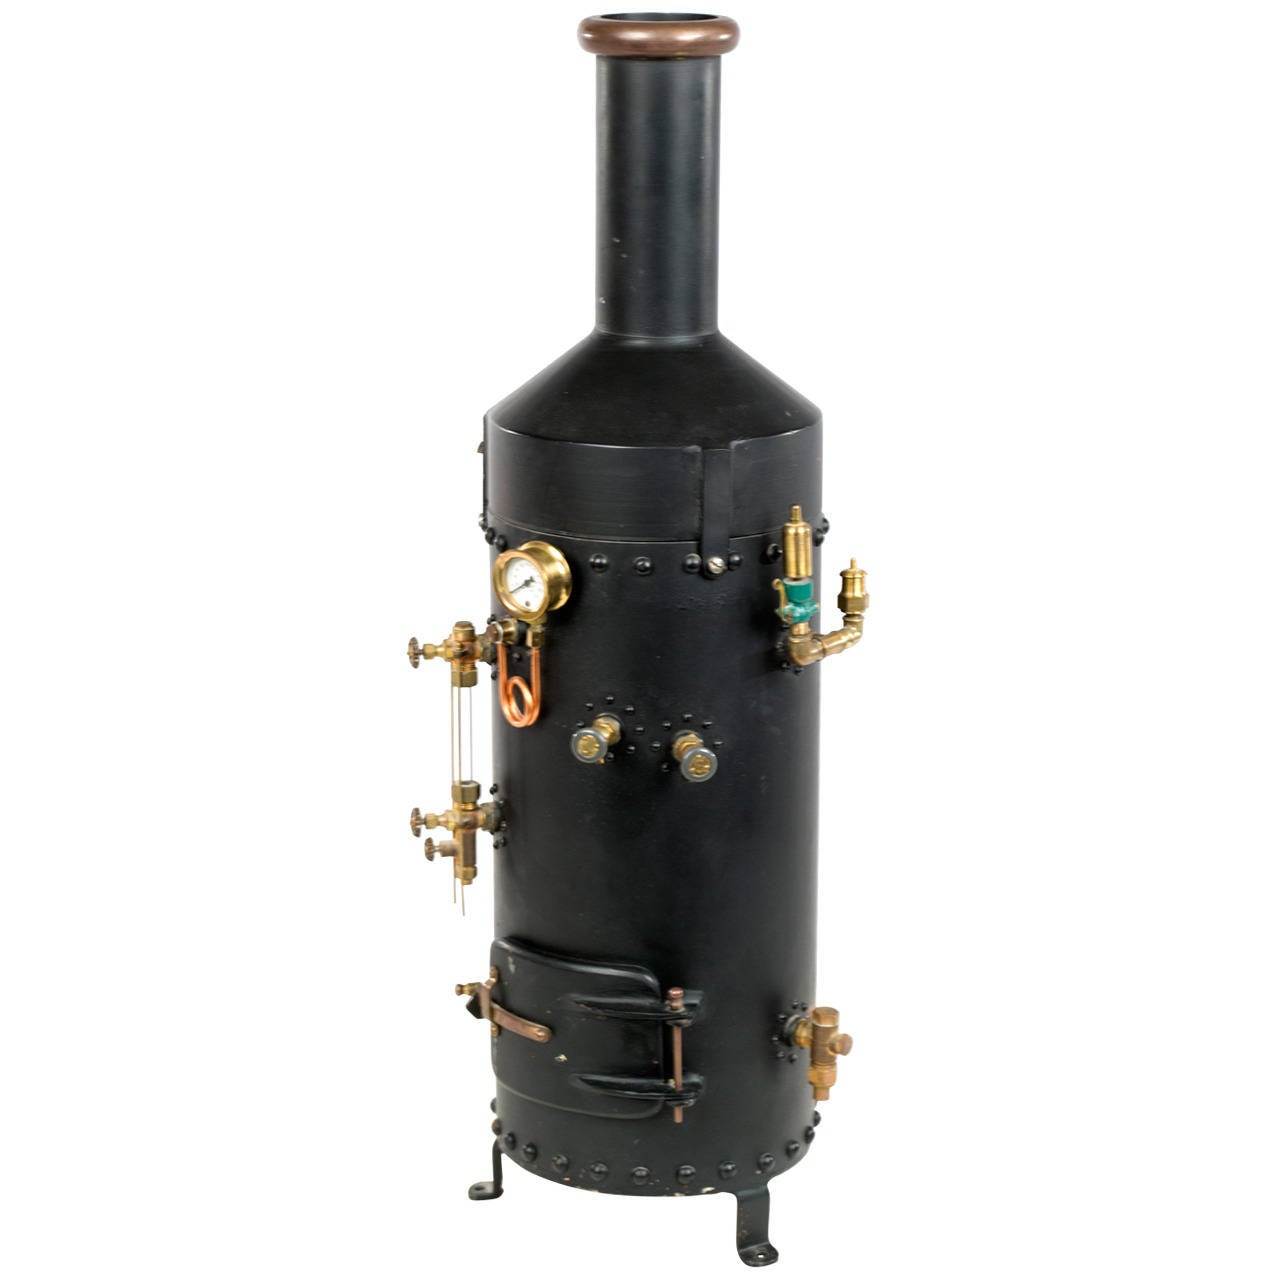 Vertical Donkey Steam Boiler Model For Sale at 1stdibs